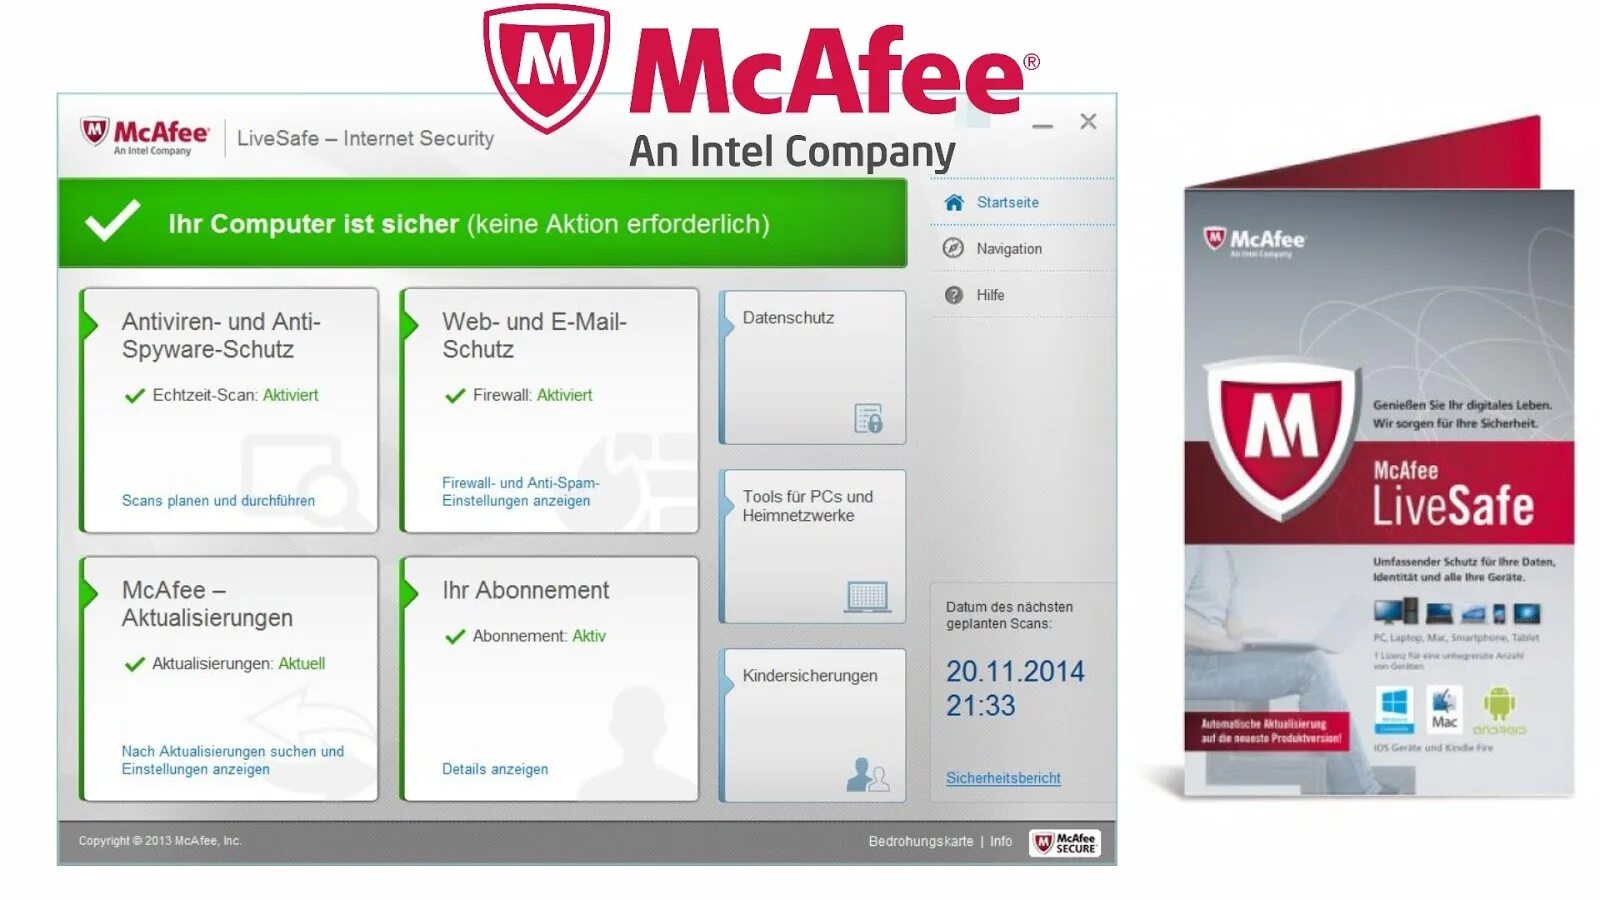 Mcafee browser. Интерфейс антивируса MCAFEE. MCAFEE Интерфейс 2021. MC Caffe антивирус Интерфейс. MCAFEE LIVESAFE Интерфейс.